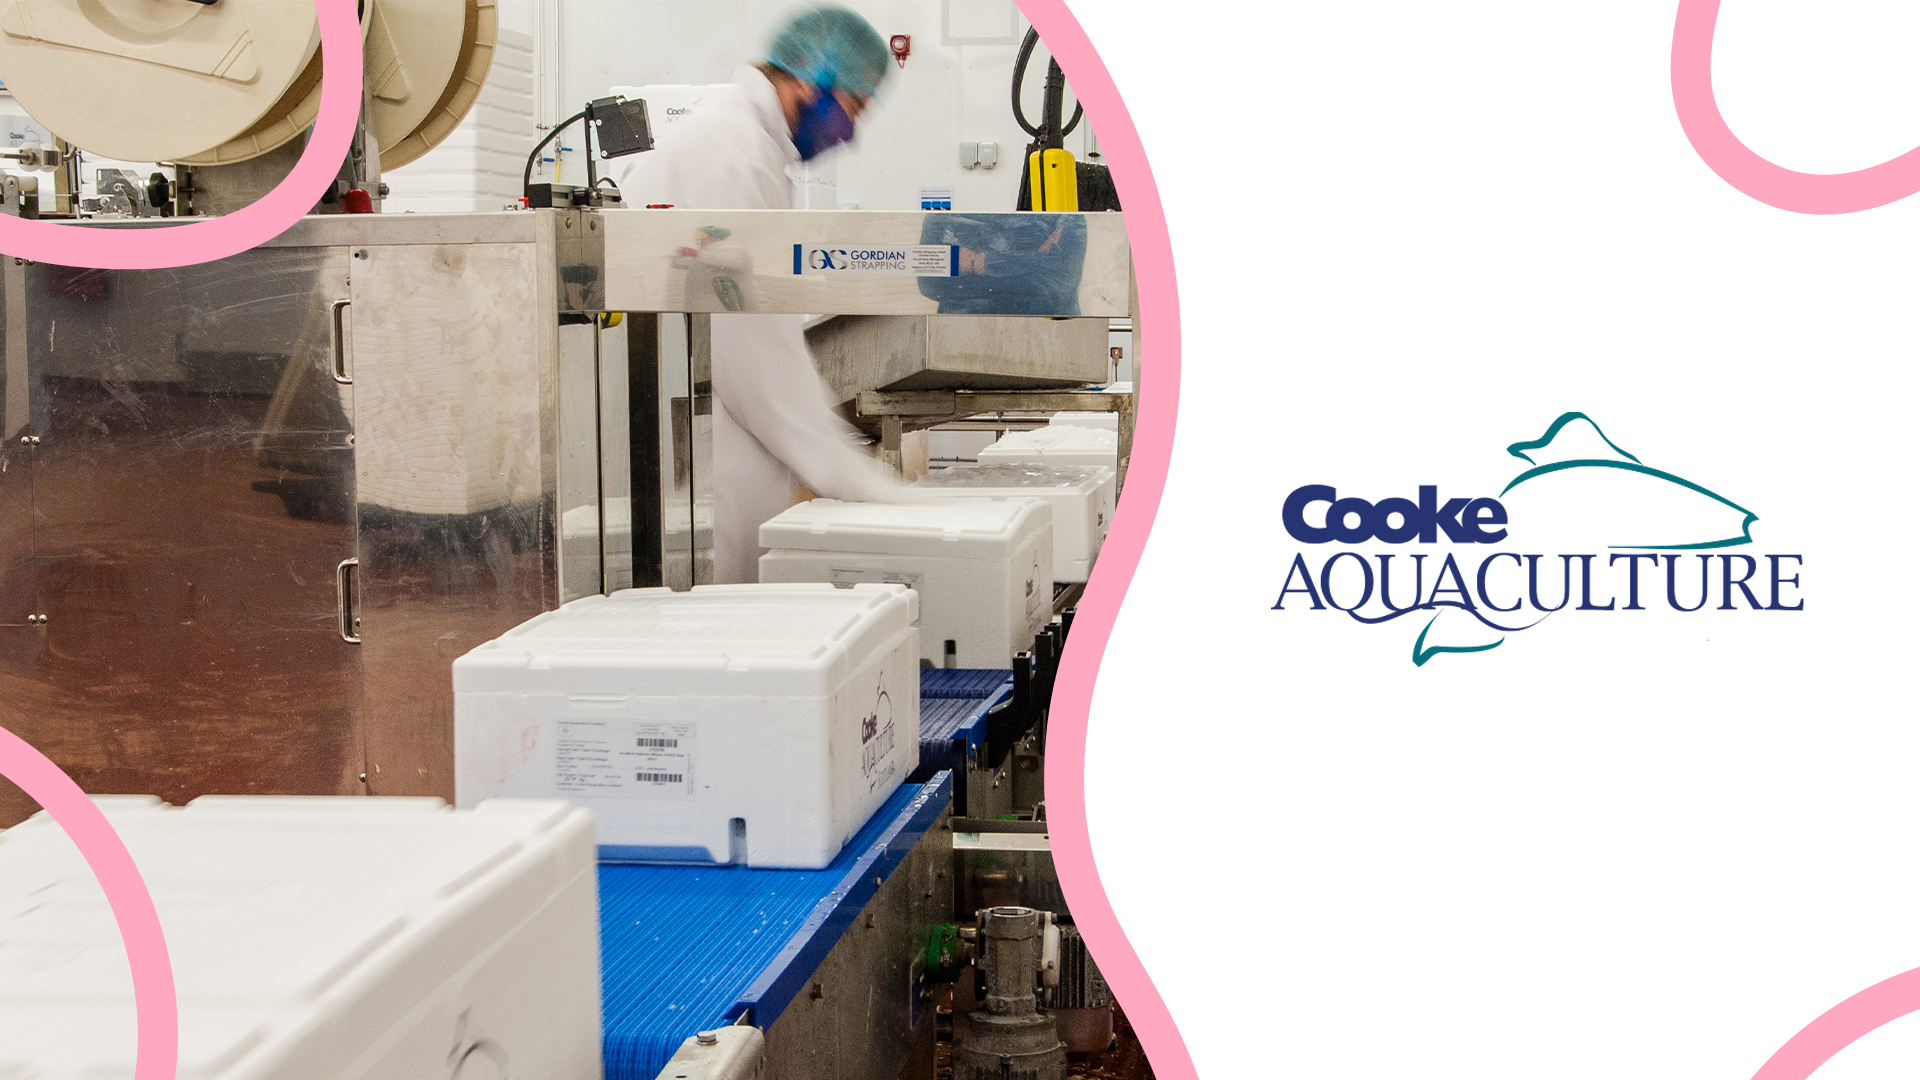 Fish processing boxes on conveyor belt alongside Cooke Aquaculture logo